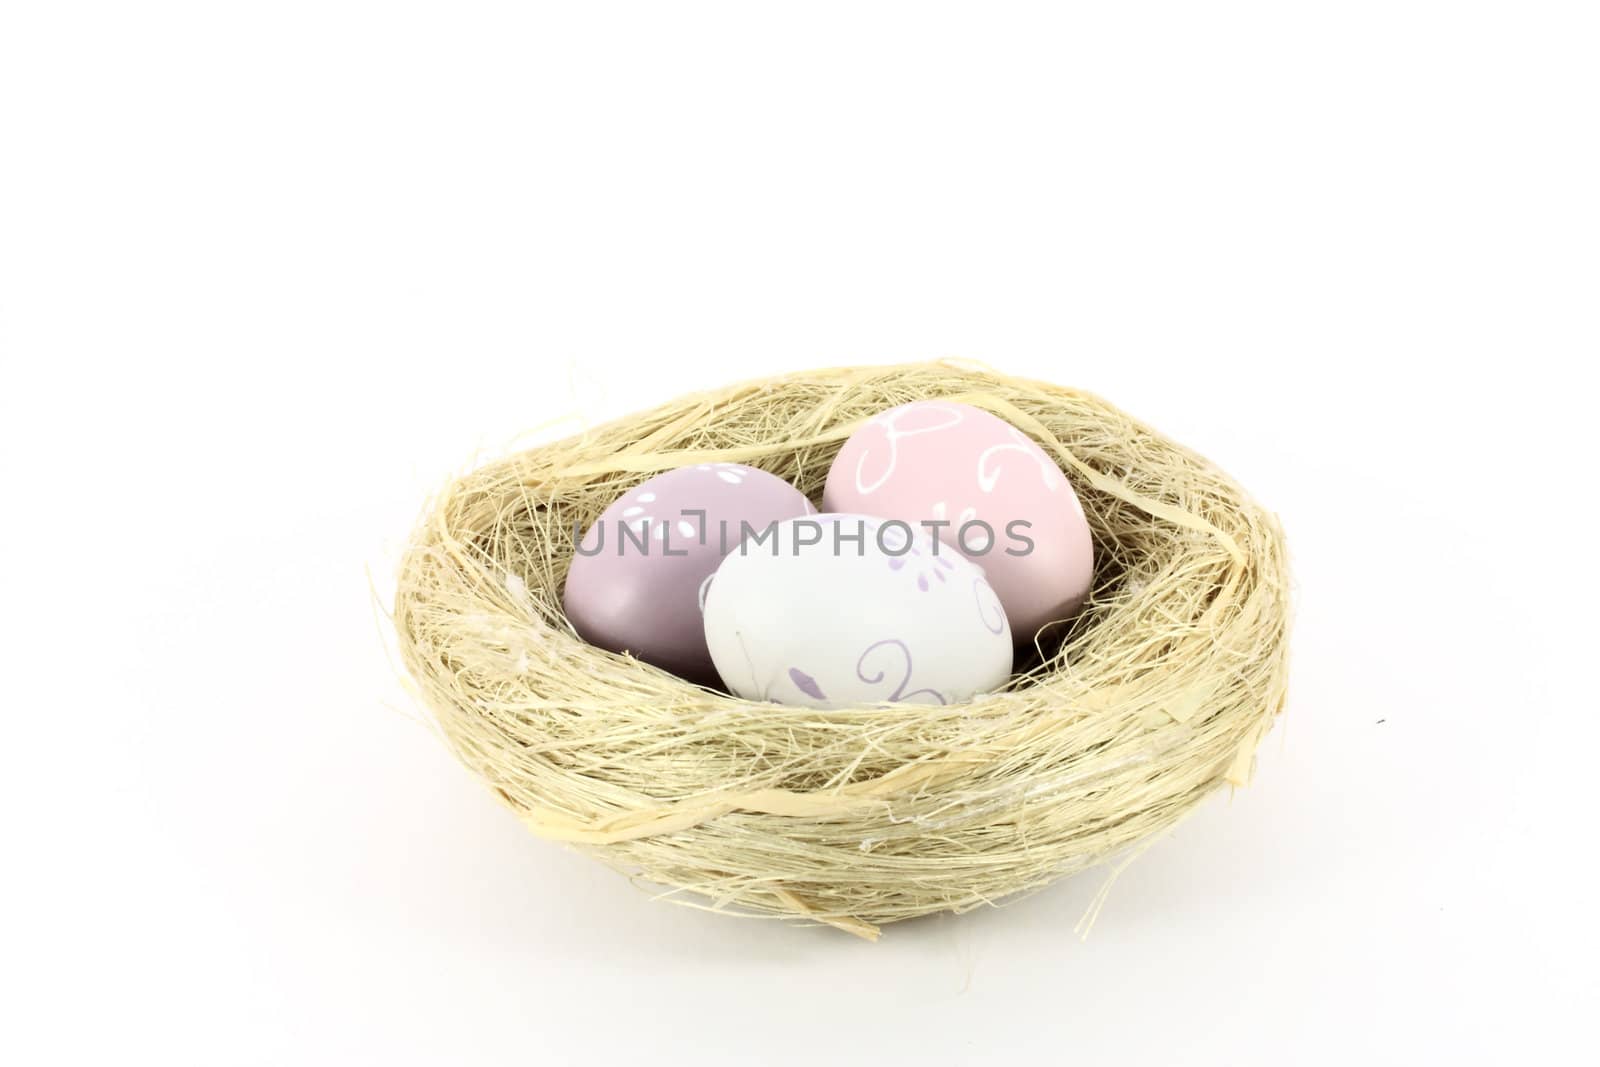 Nest with eggs by Boris15